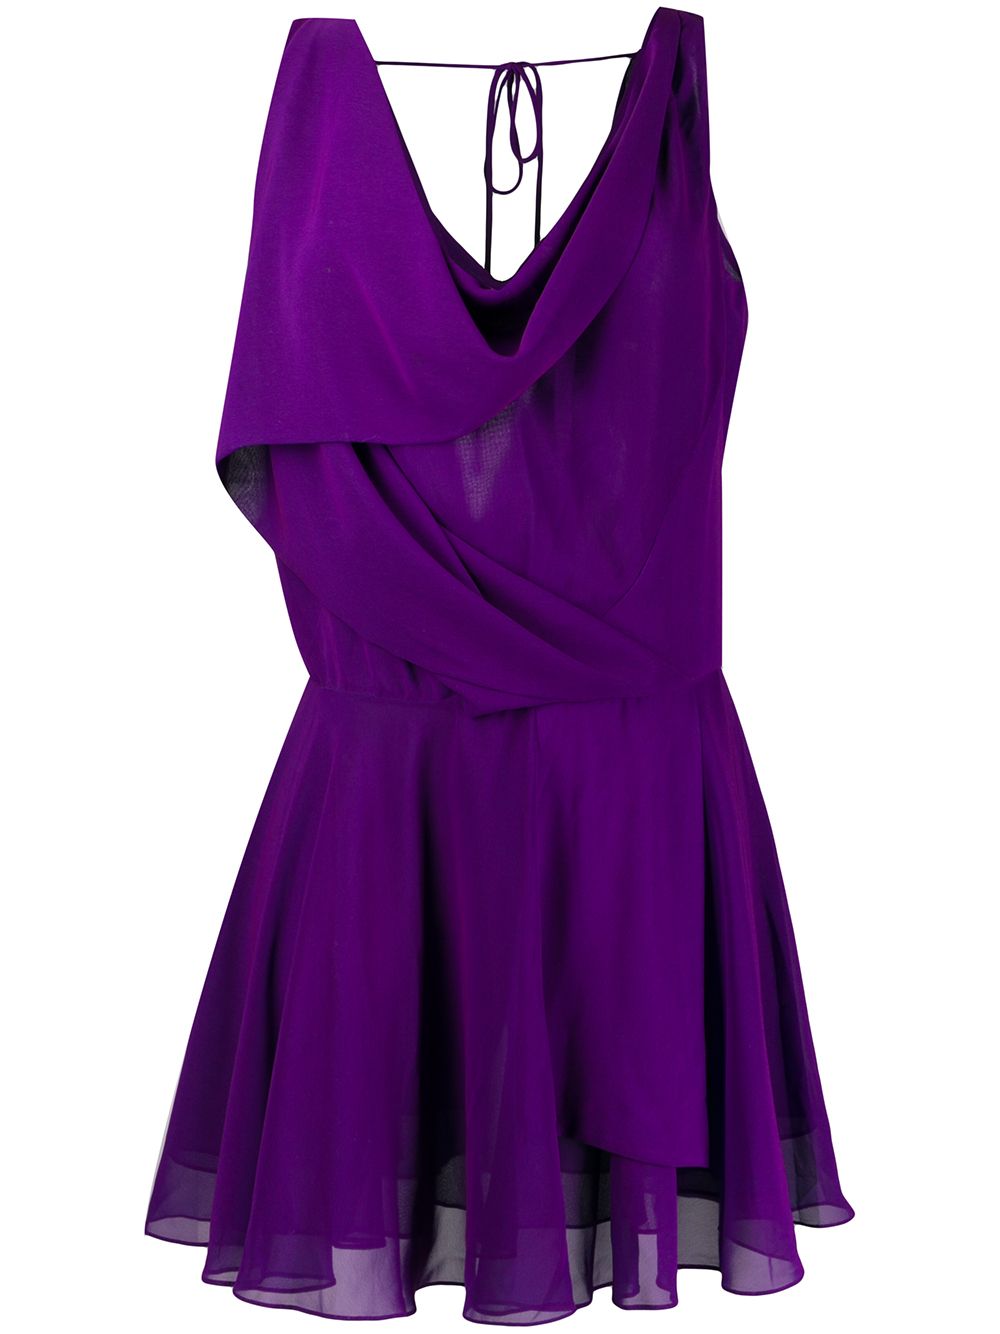 Vivienne Westwood Pre-Owned Draped Sheer Dress - Farfetch